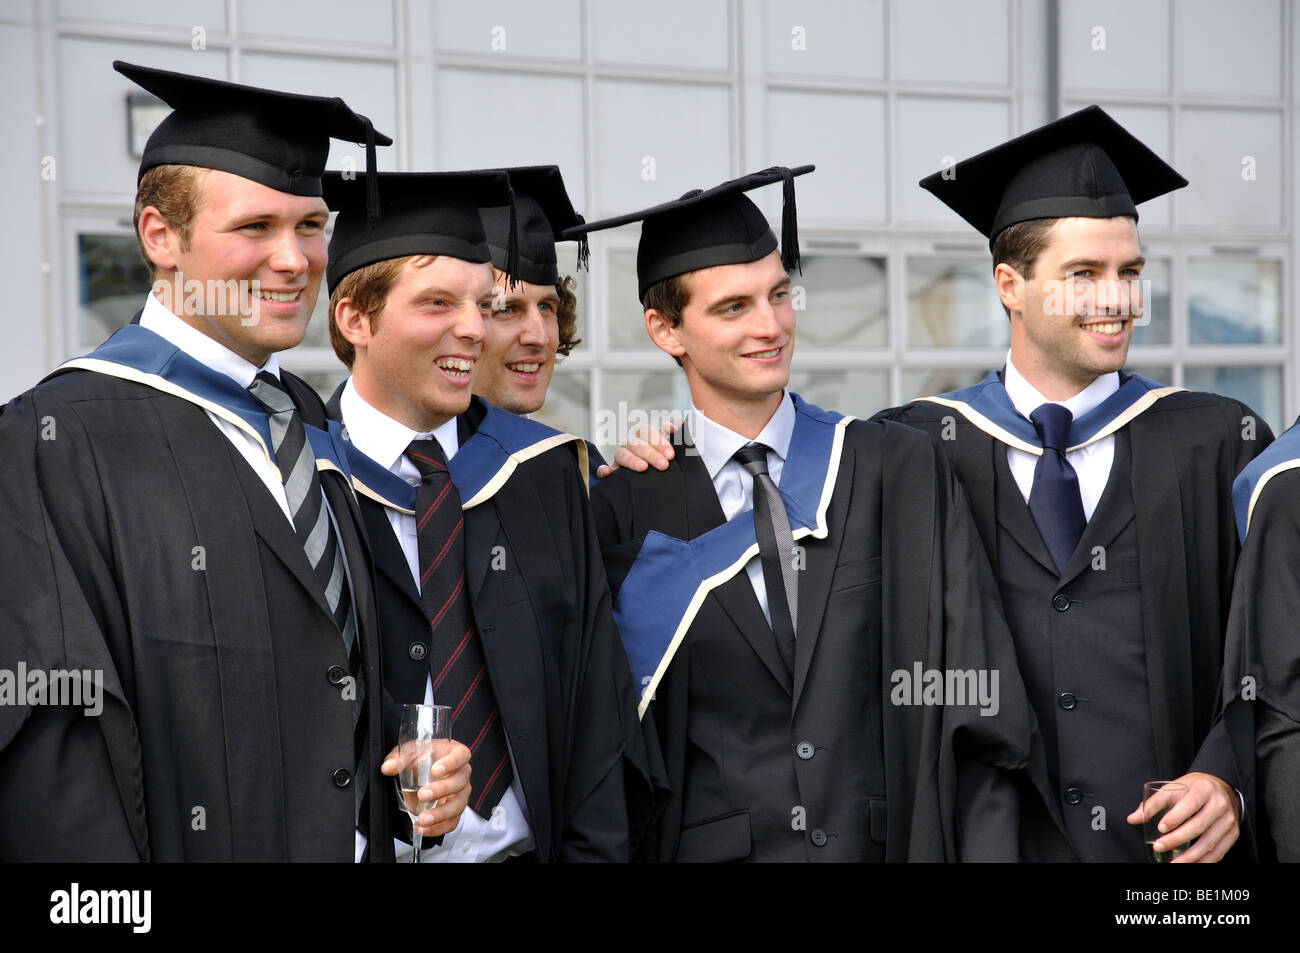 Male university graduates at graduation ceremony, Oxford Brookes ...